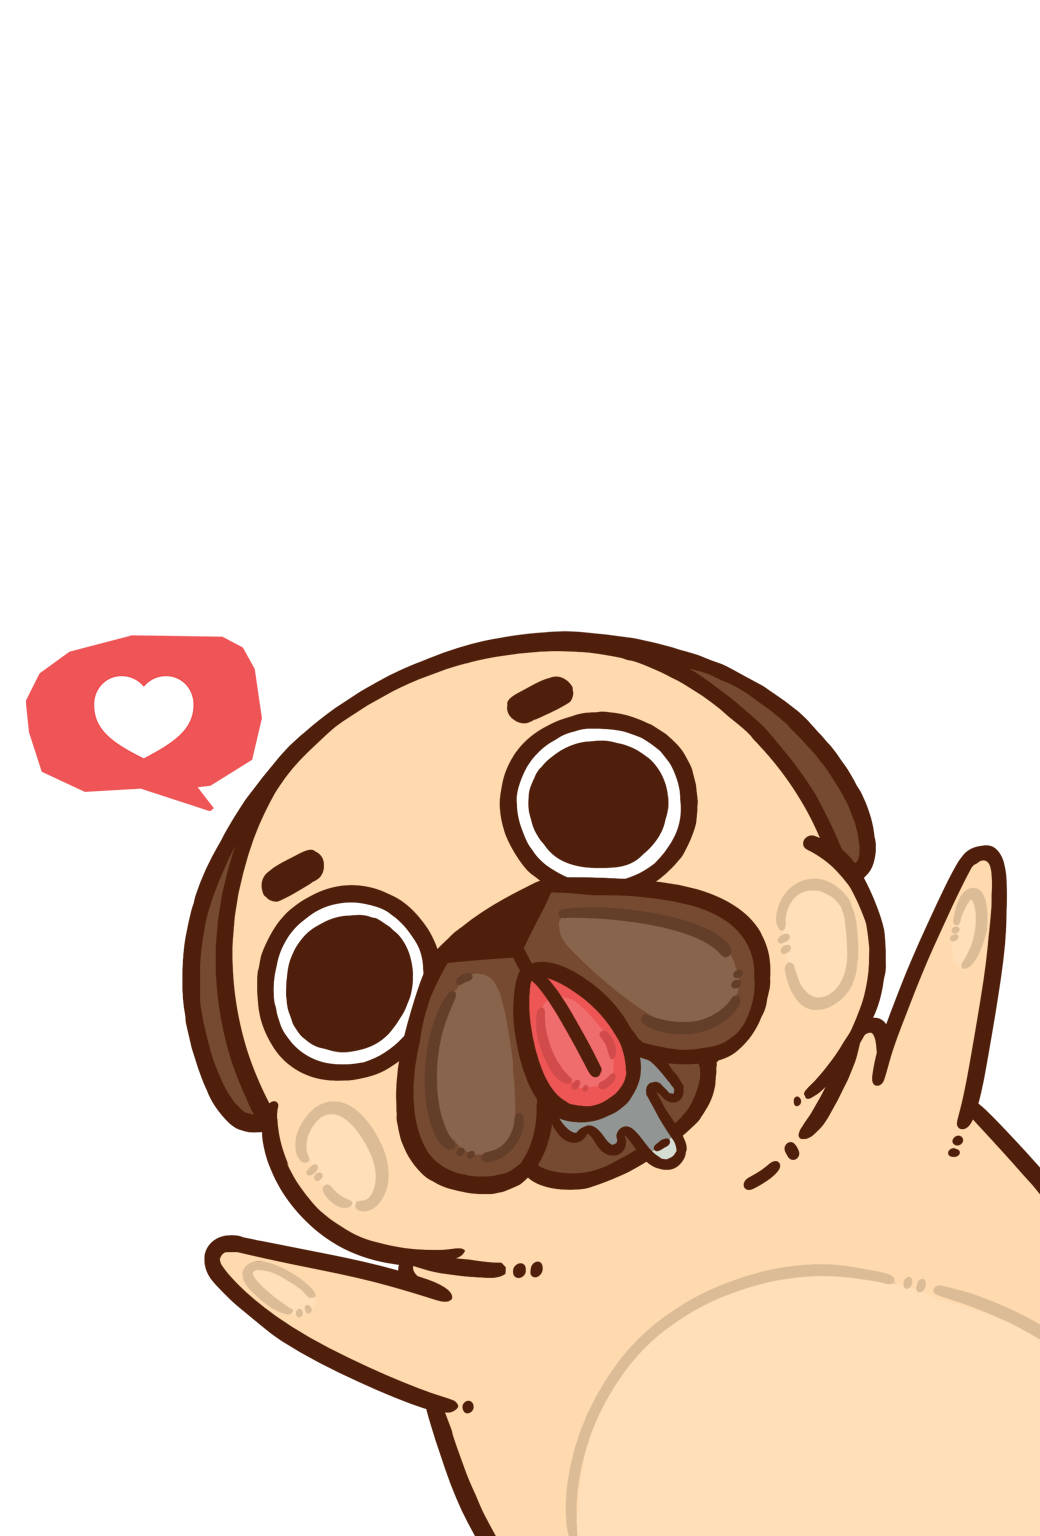 Cartoon Pug Dog With Heart